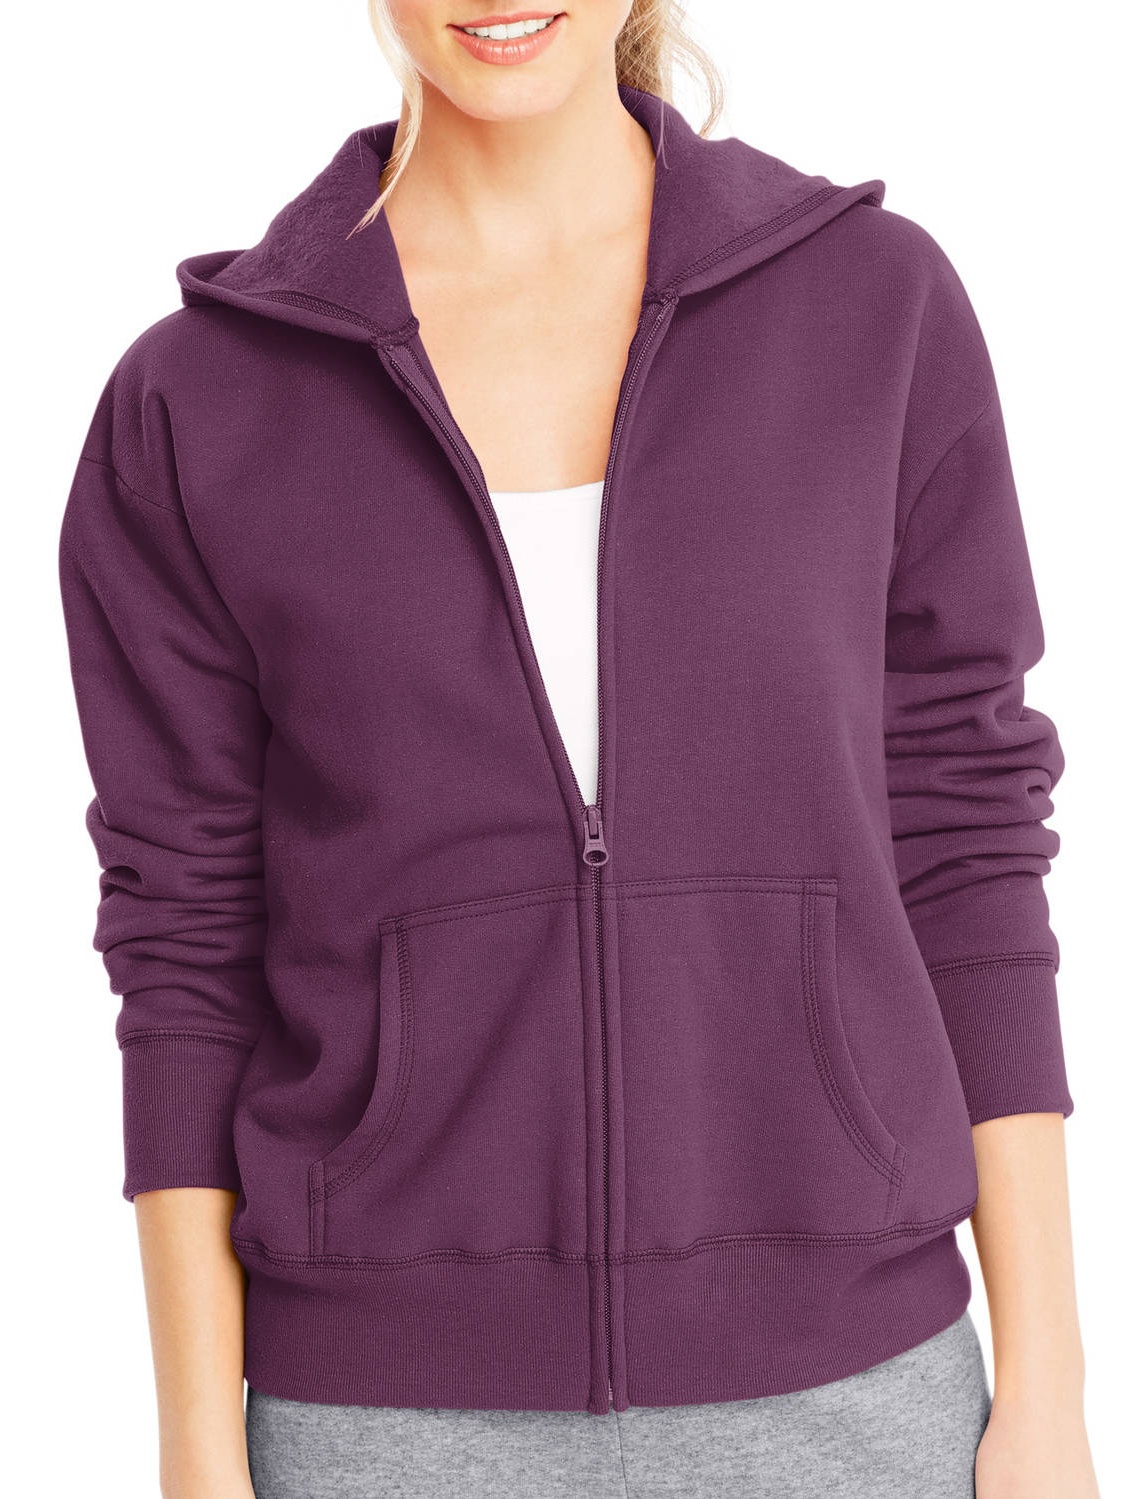 Hanes ComfortSoft EcoSmart Women's Fleece Full-Zip Hoodie Sweatshirt, Sizes S-XXL - image 1 of 2